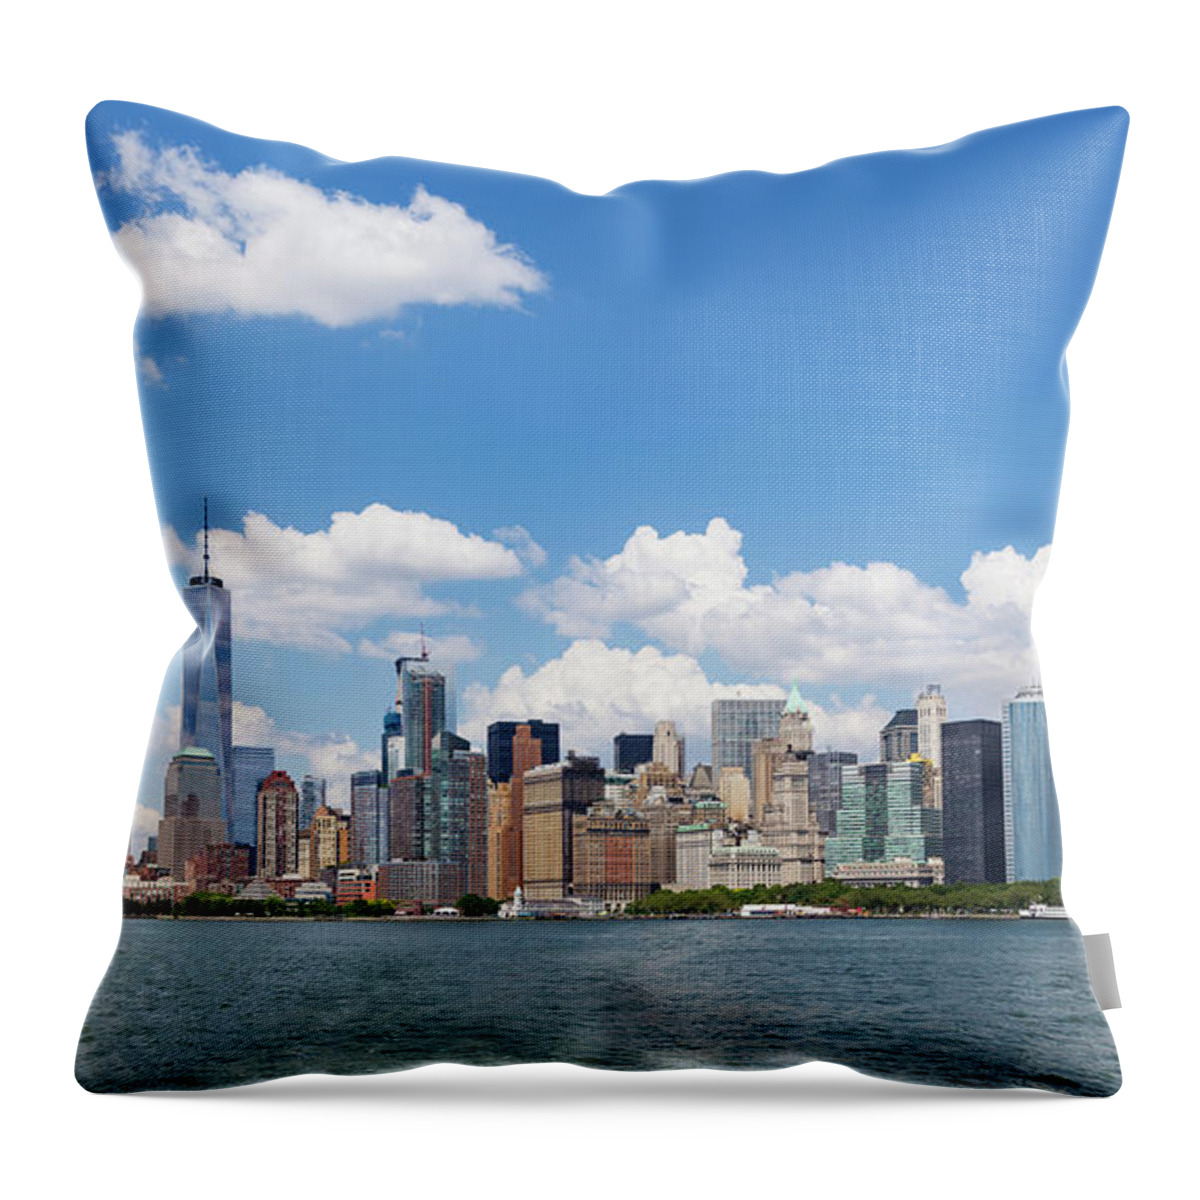 Manhattan Skyline Throw Pillow featuring the photograph Manhattan Skyline by Sanjeev Singhal